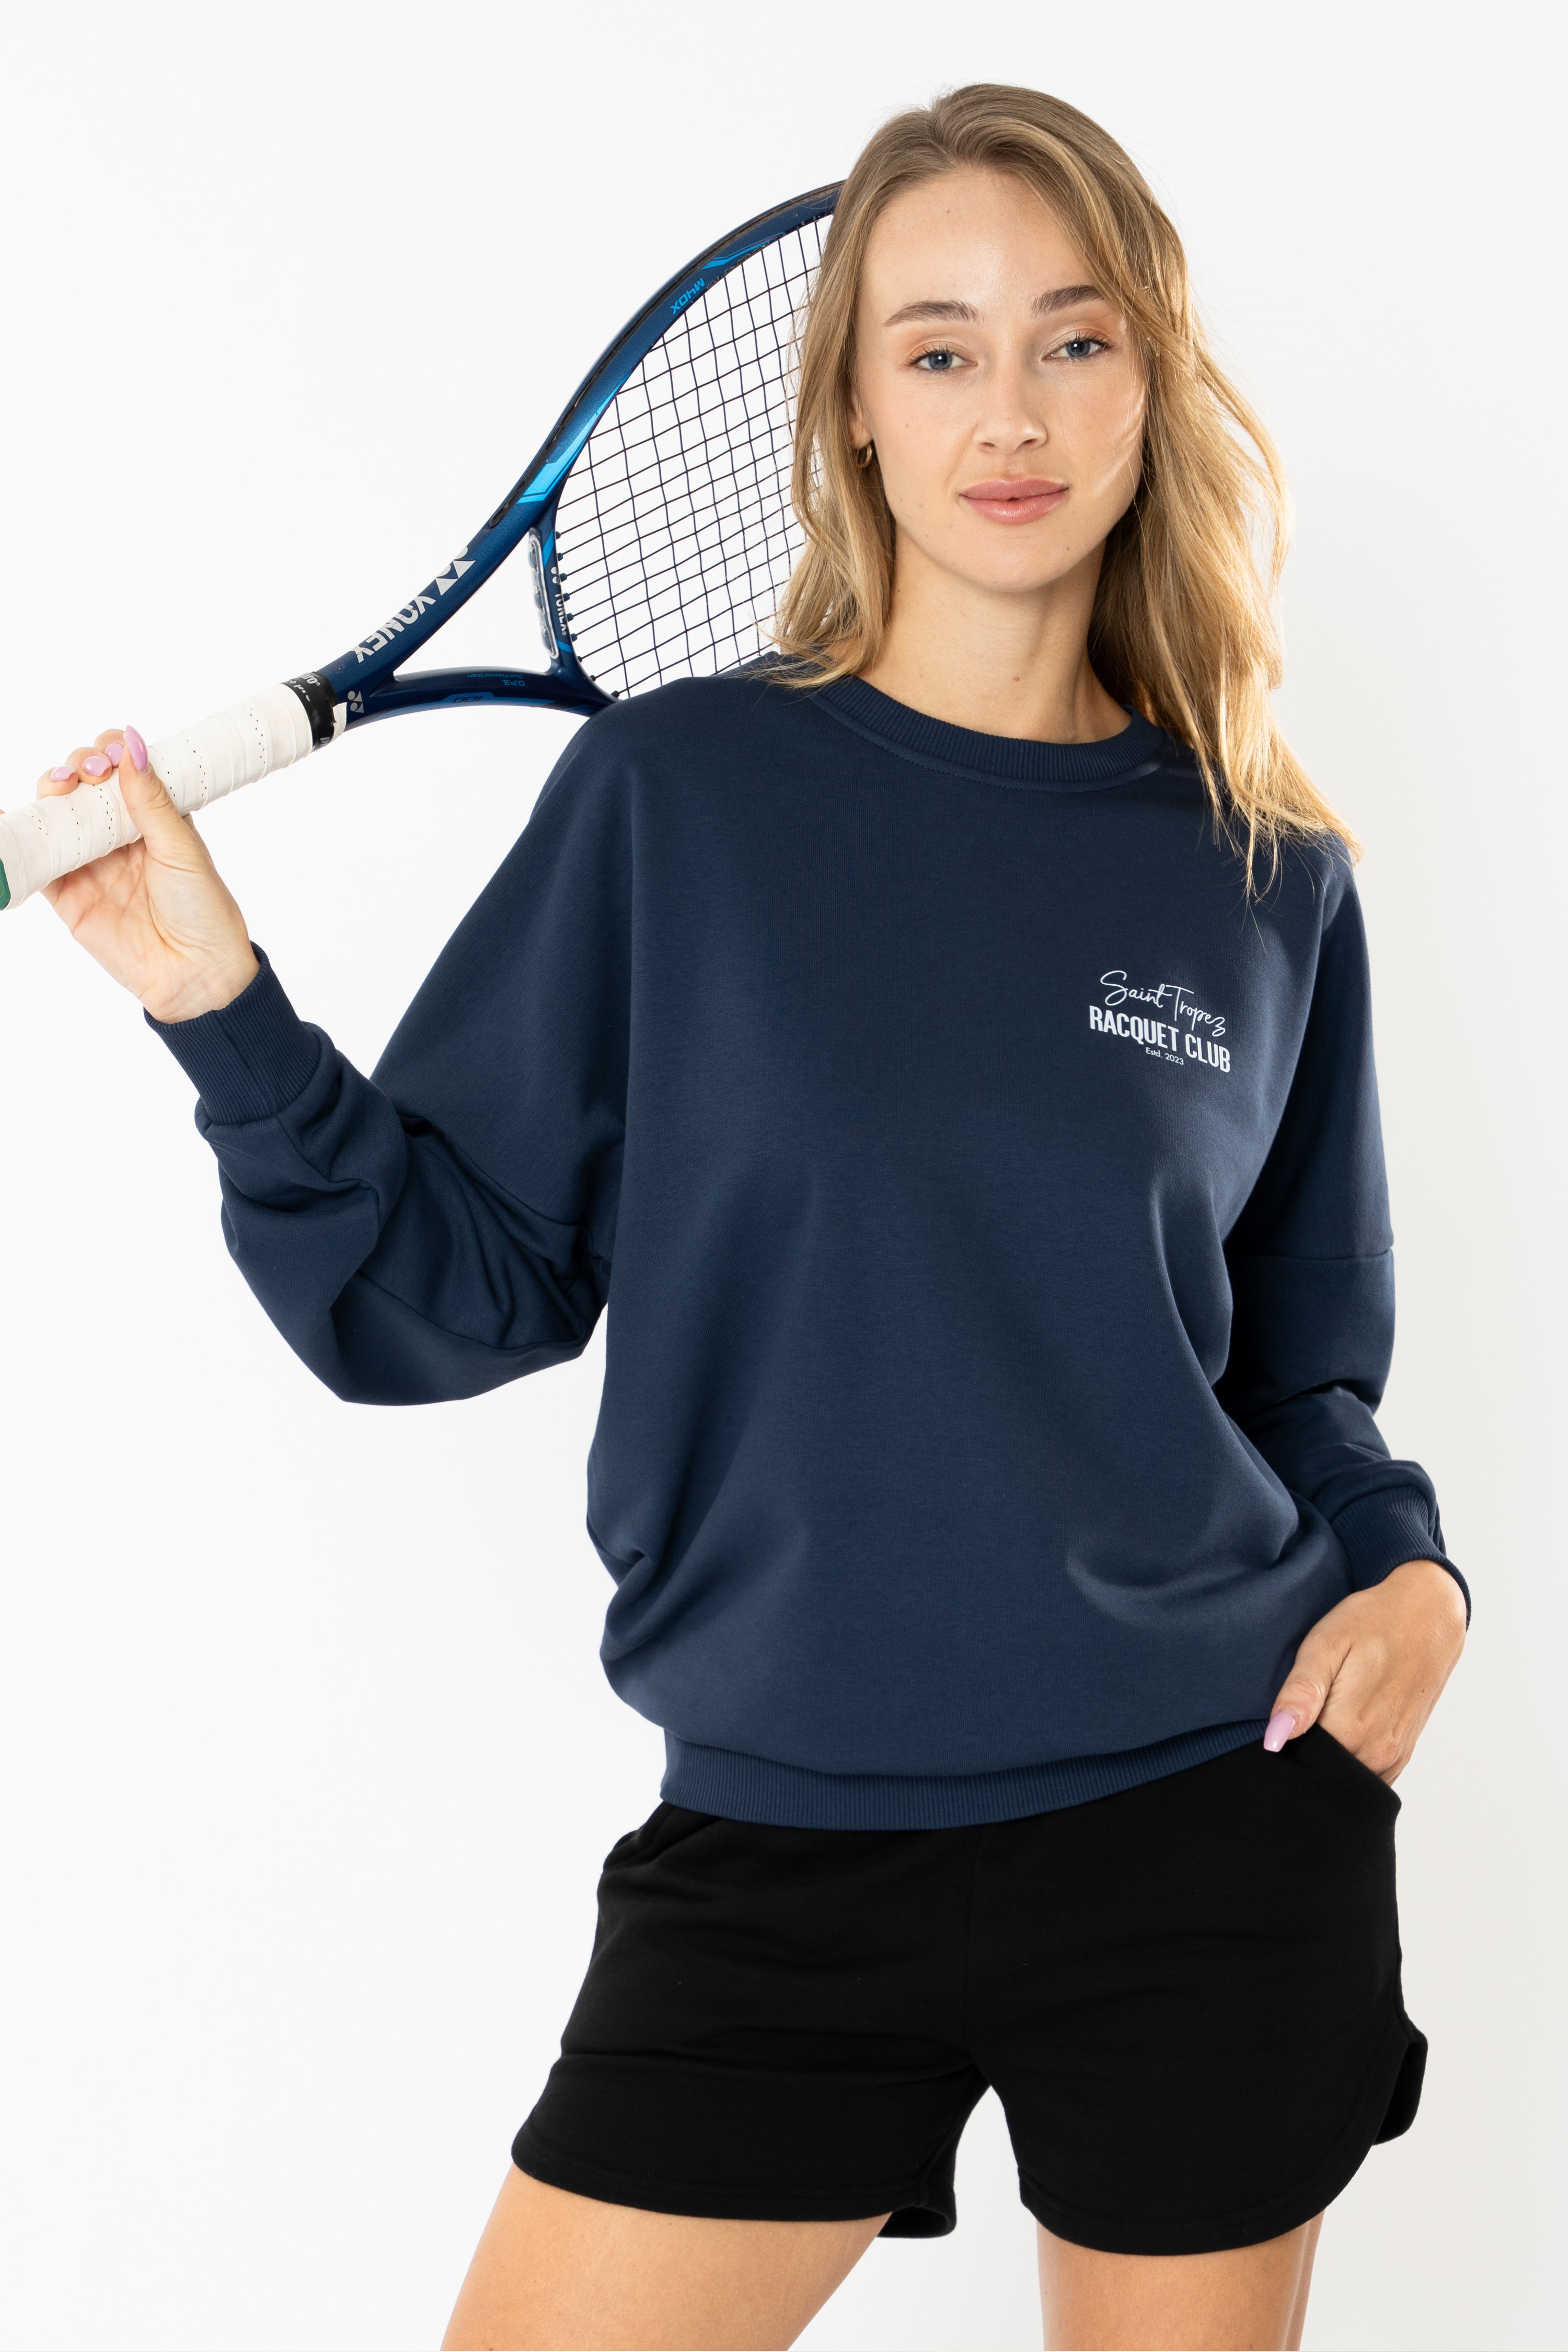 Racquet Club Oversize Sweatshirt Kadın - Lacivert